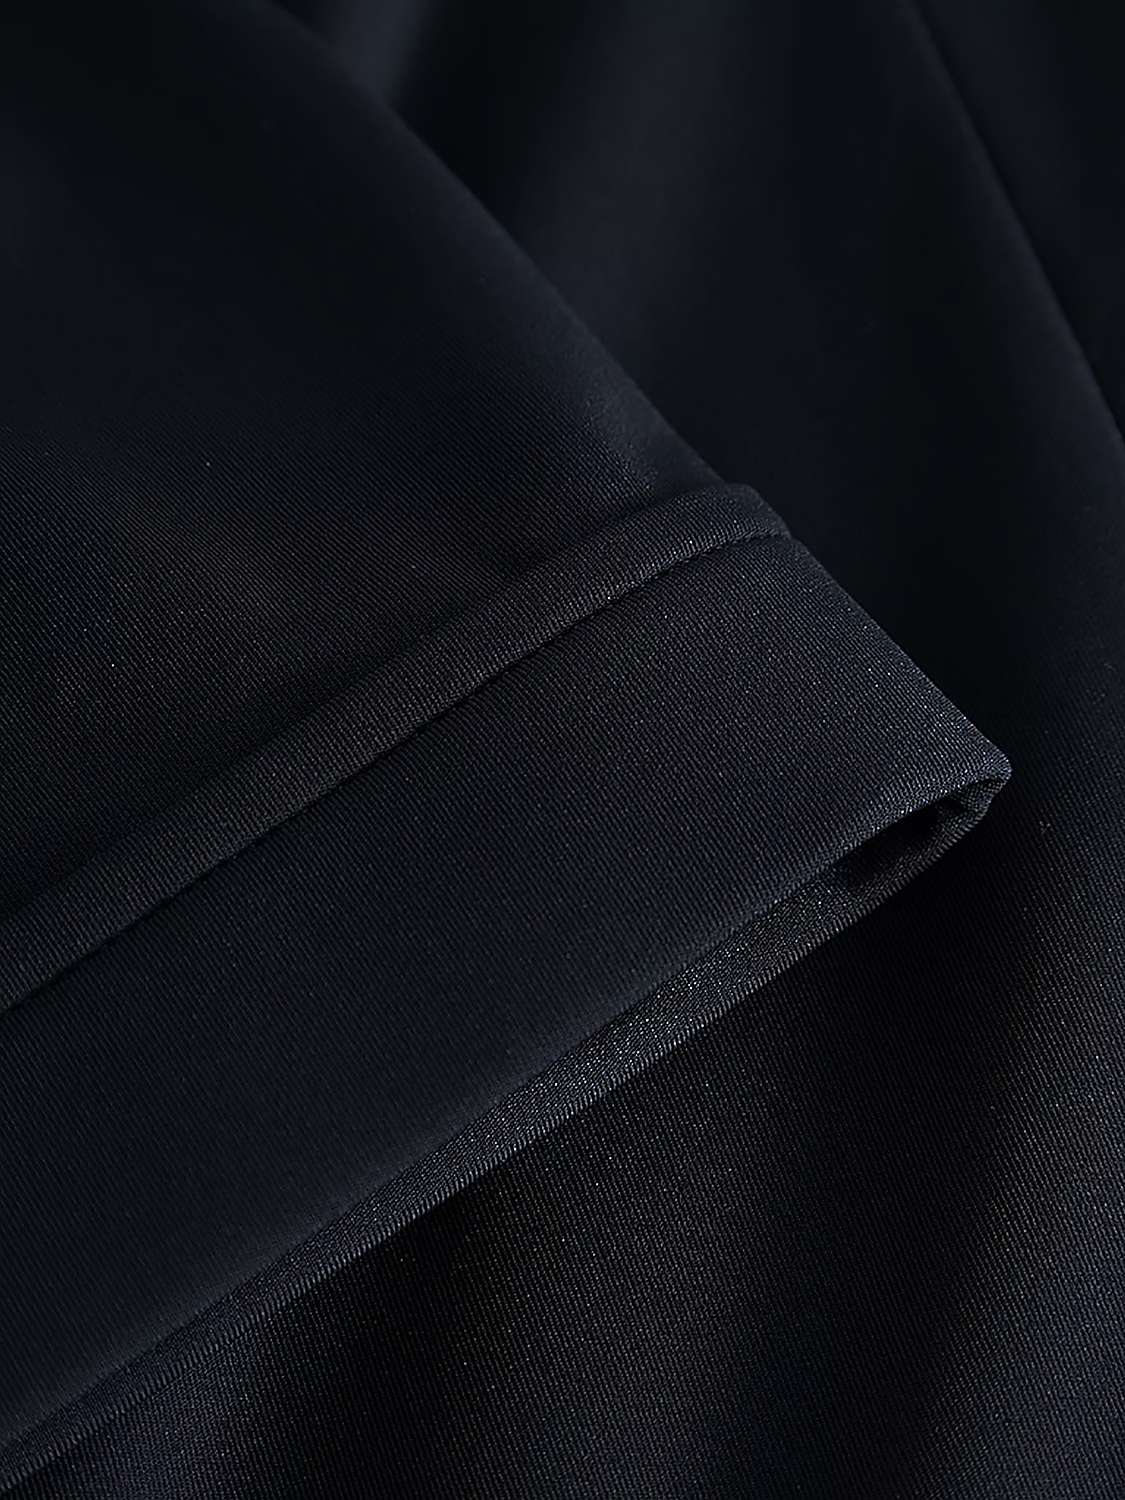 JOOP! Pals Short Sleeve Shirt, Black at John Lewis & Partners